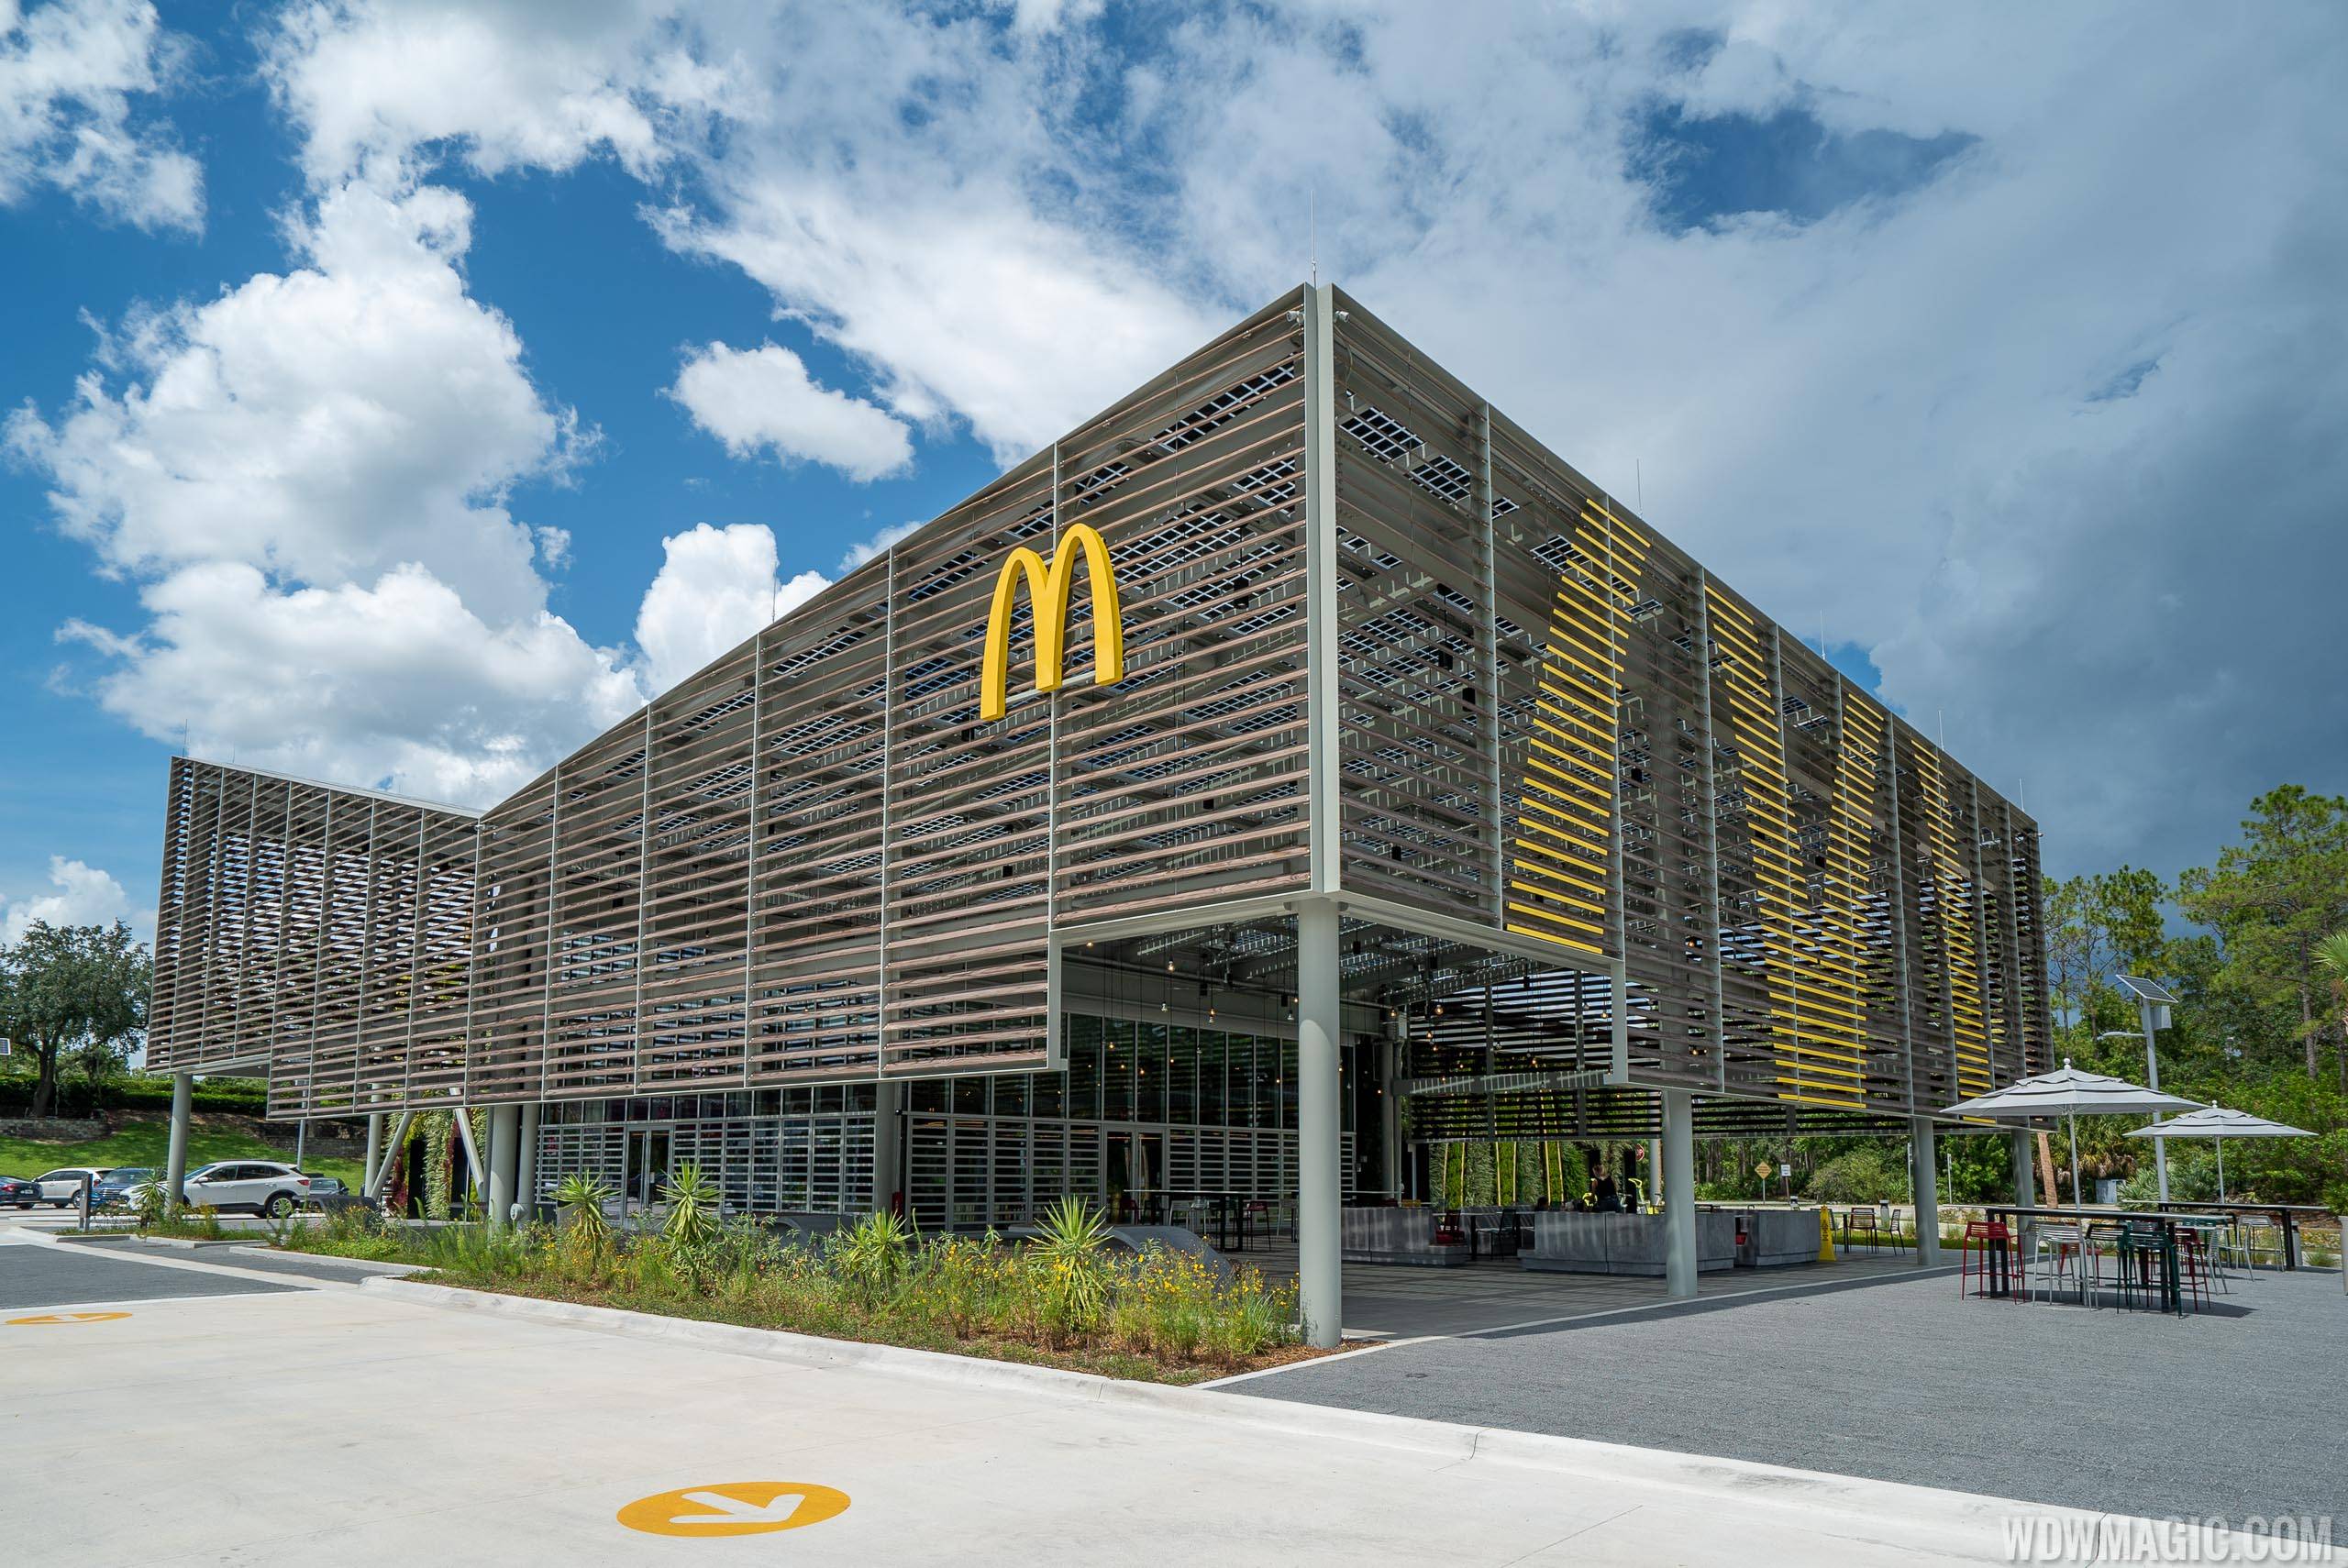 PHOTOS - A look at the new Walt Disney World solar powered McDonald's